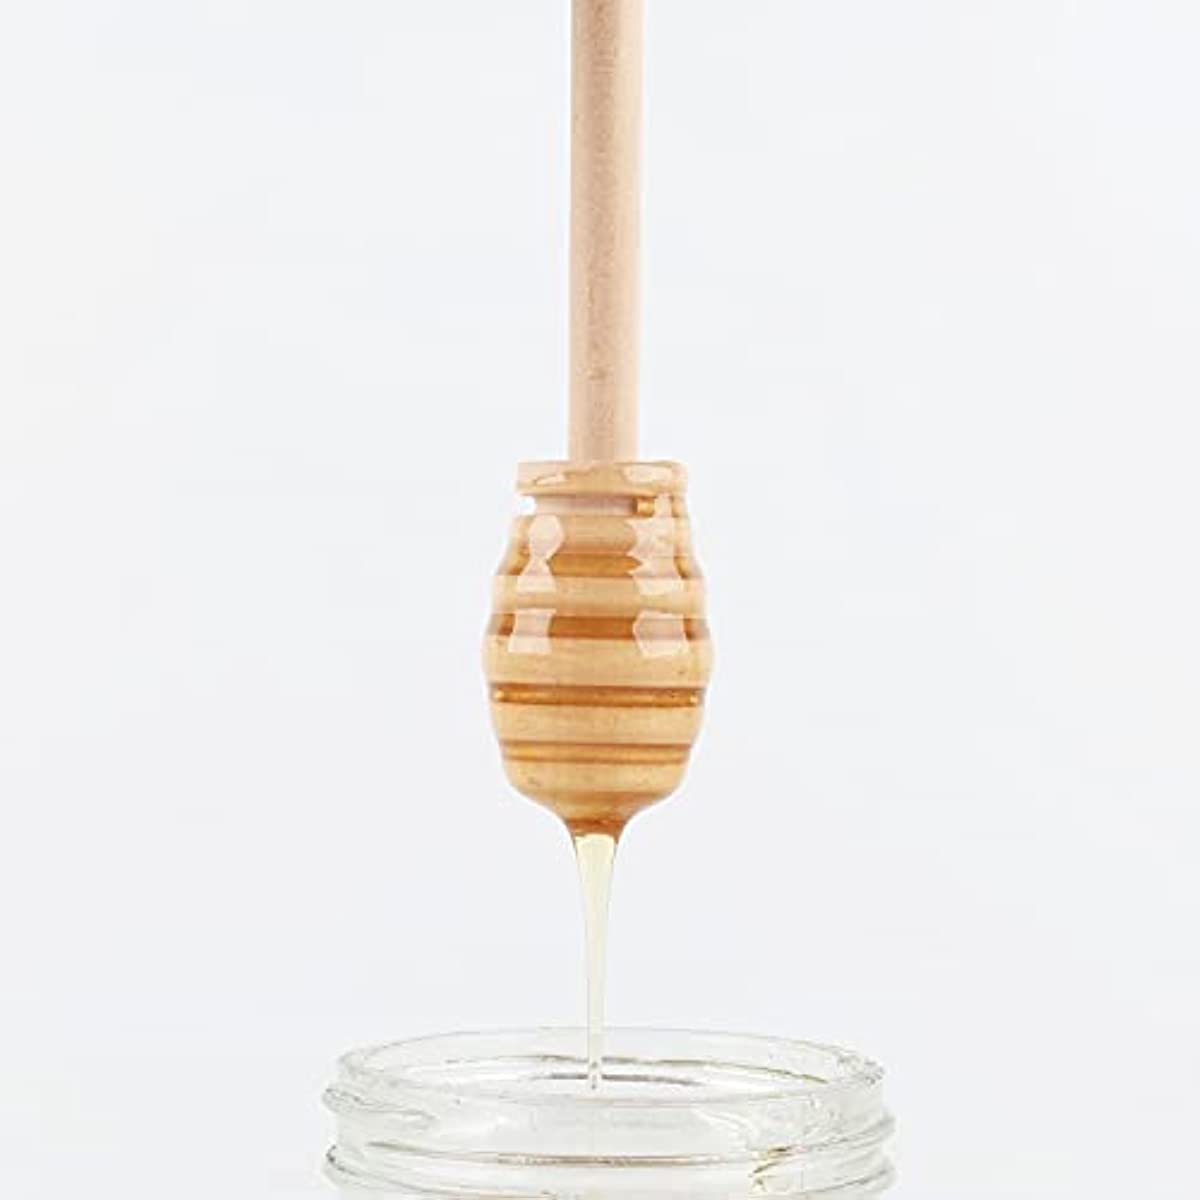 Honey Dipper Stick for Honey Jar Dispense Drizzle Honey, 10 Pcs 6inch / 15cm Wood Honey Dippers Sticks - Honey Spoons - Honeycomb Stick